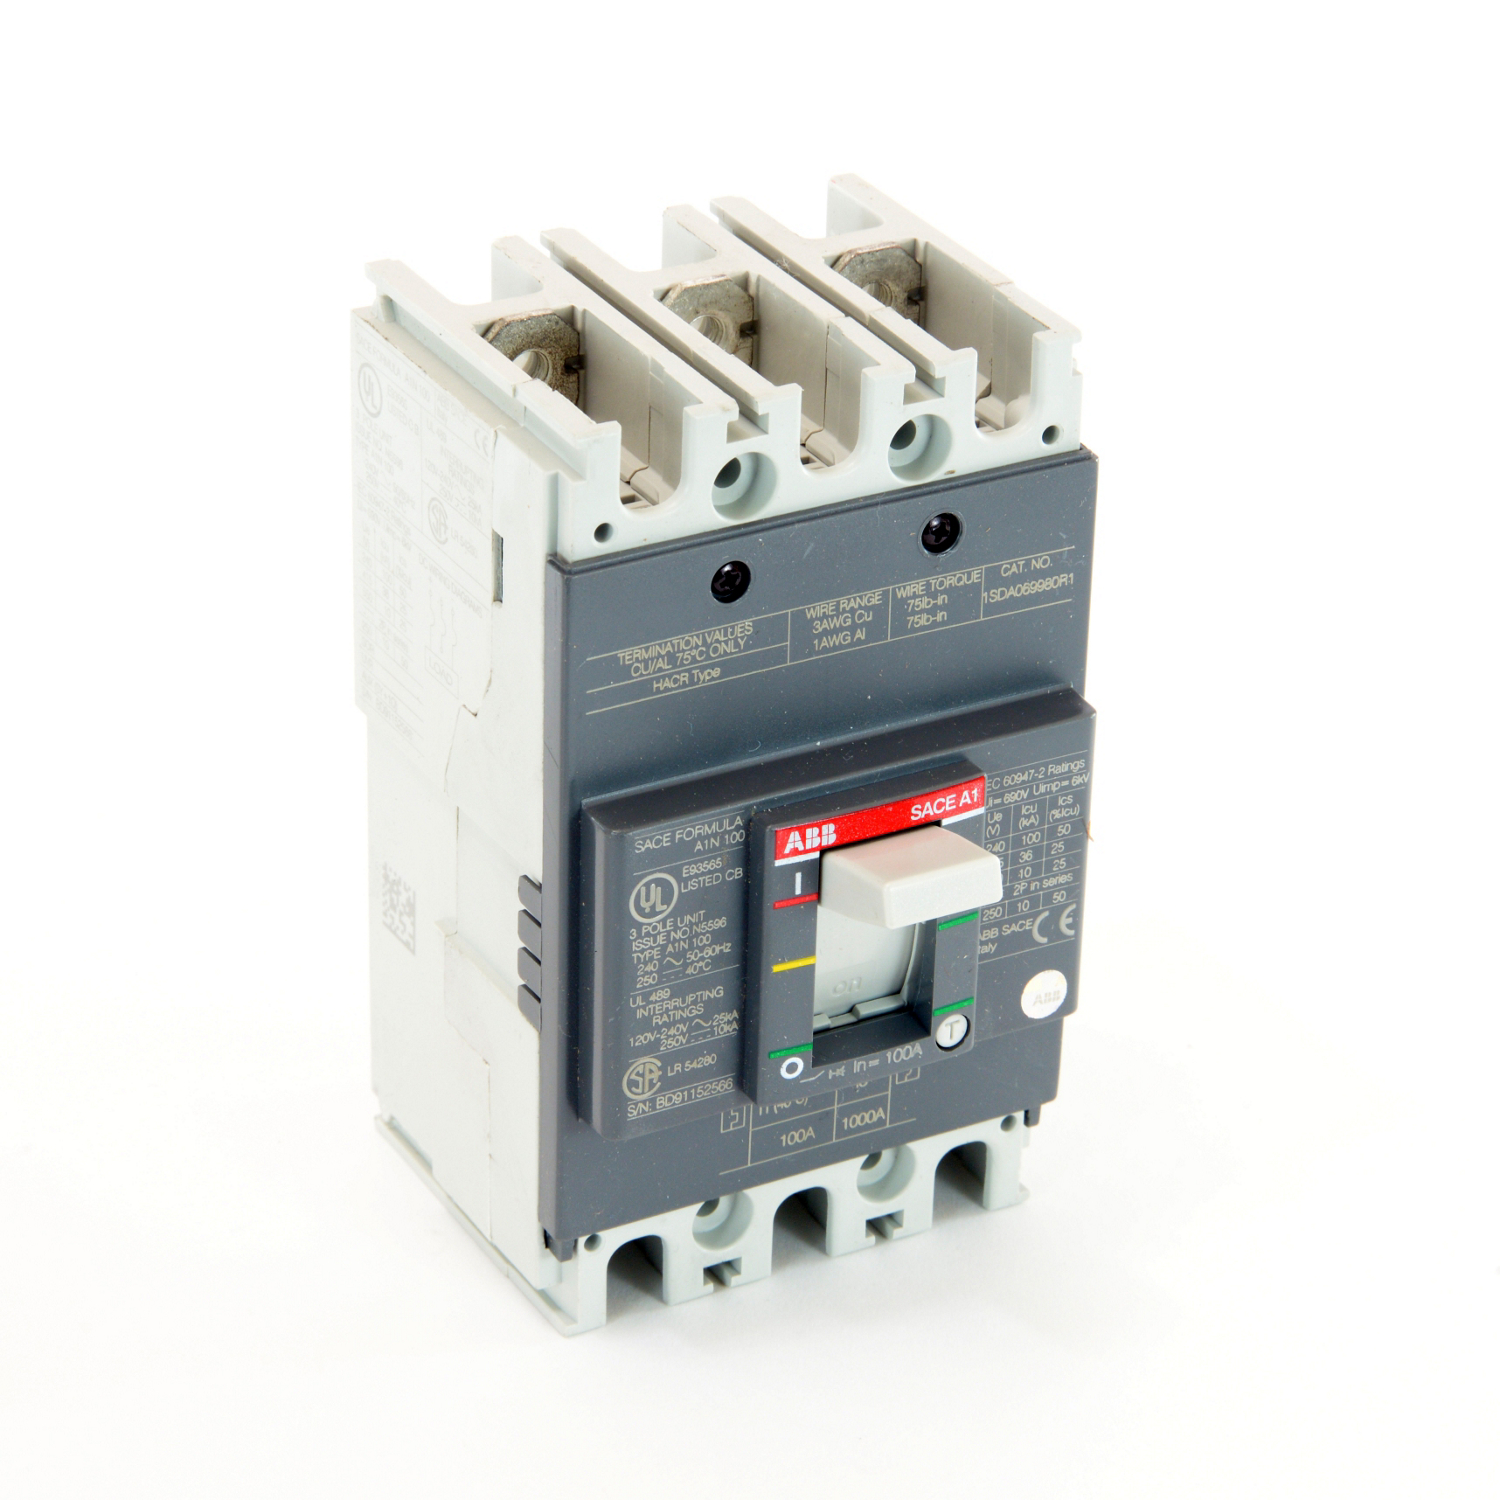 ABB A1N100TW FORMULA Molded Case Circuit Breaker